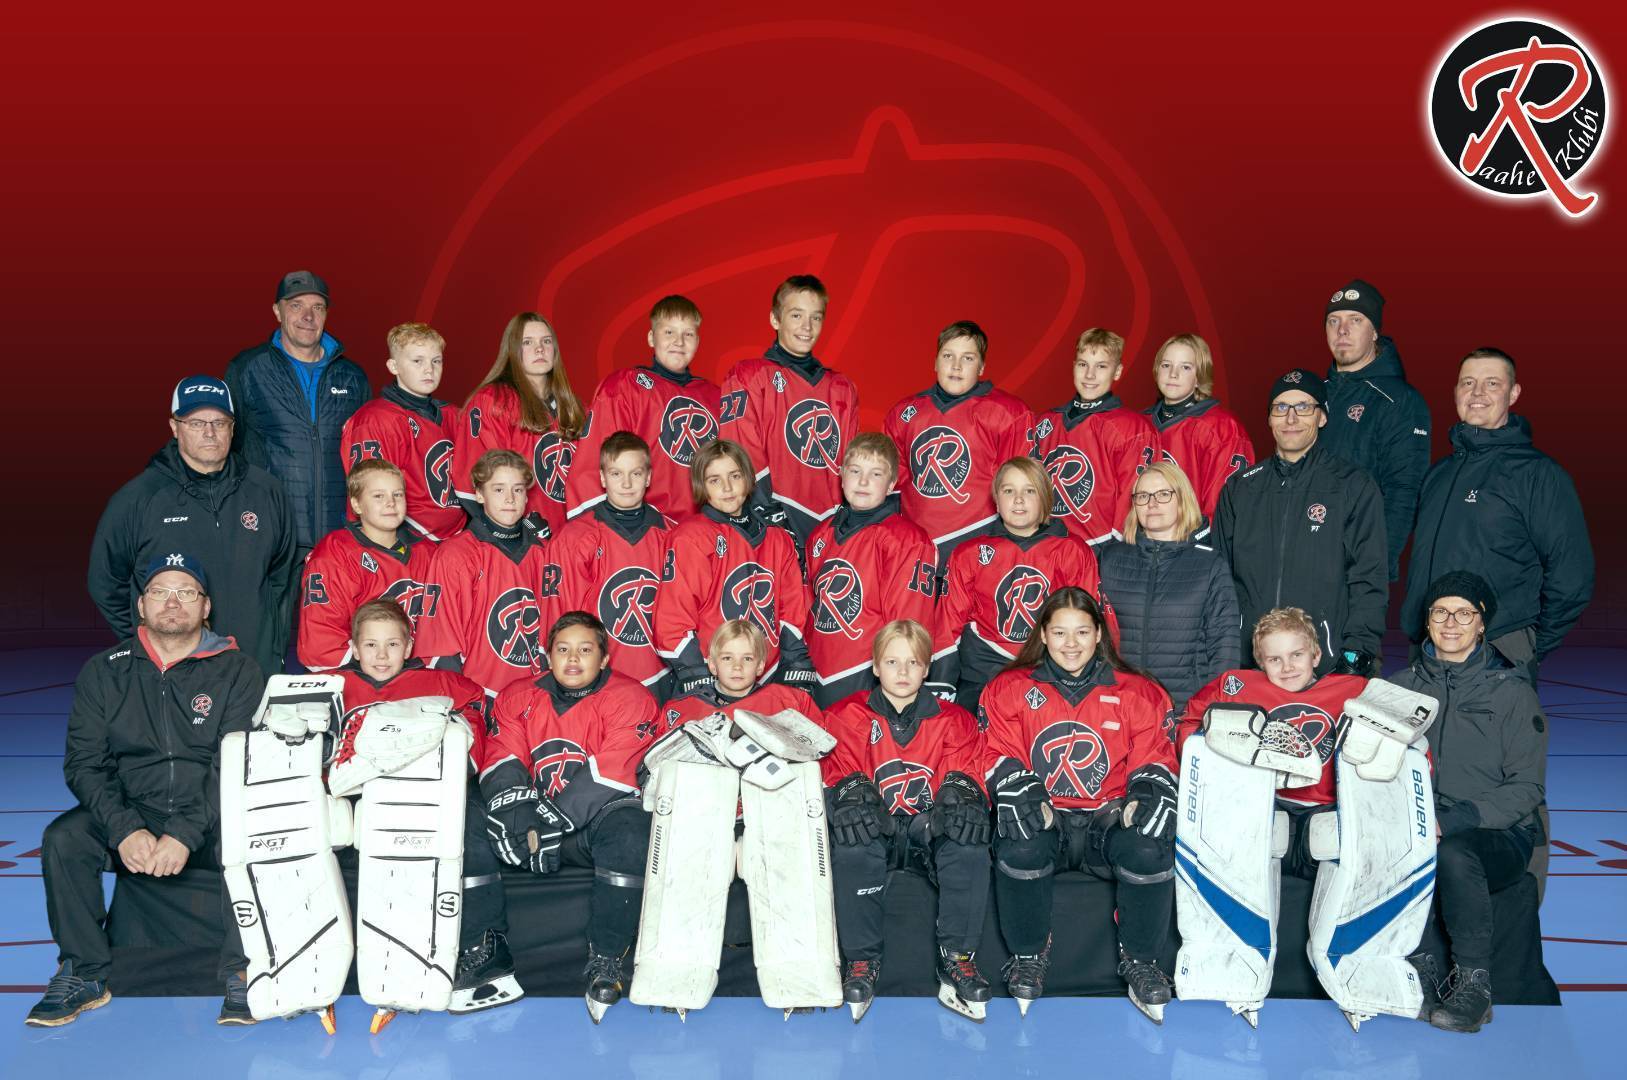 Raahen jääkiekkoklubi U14 joukkue